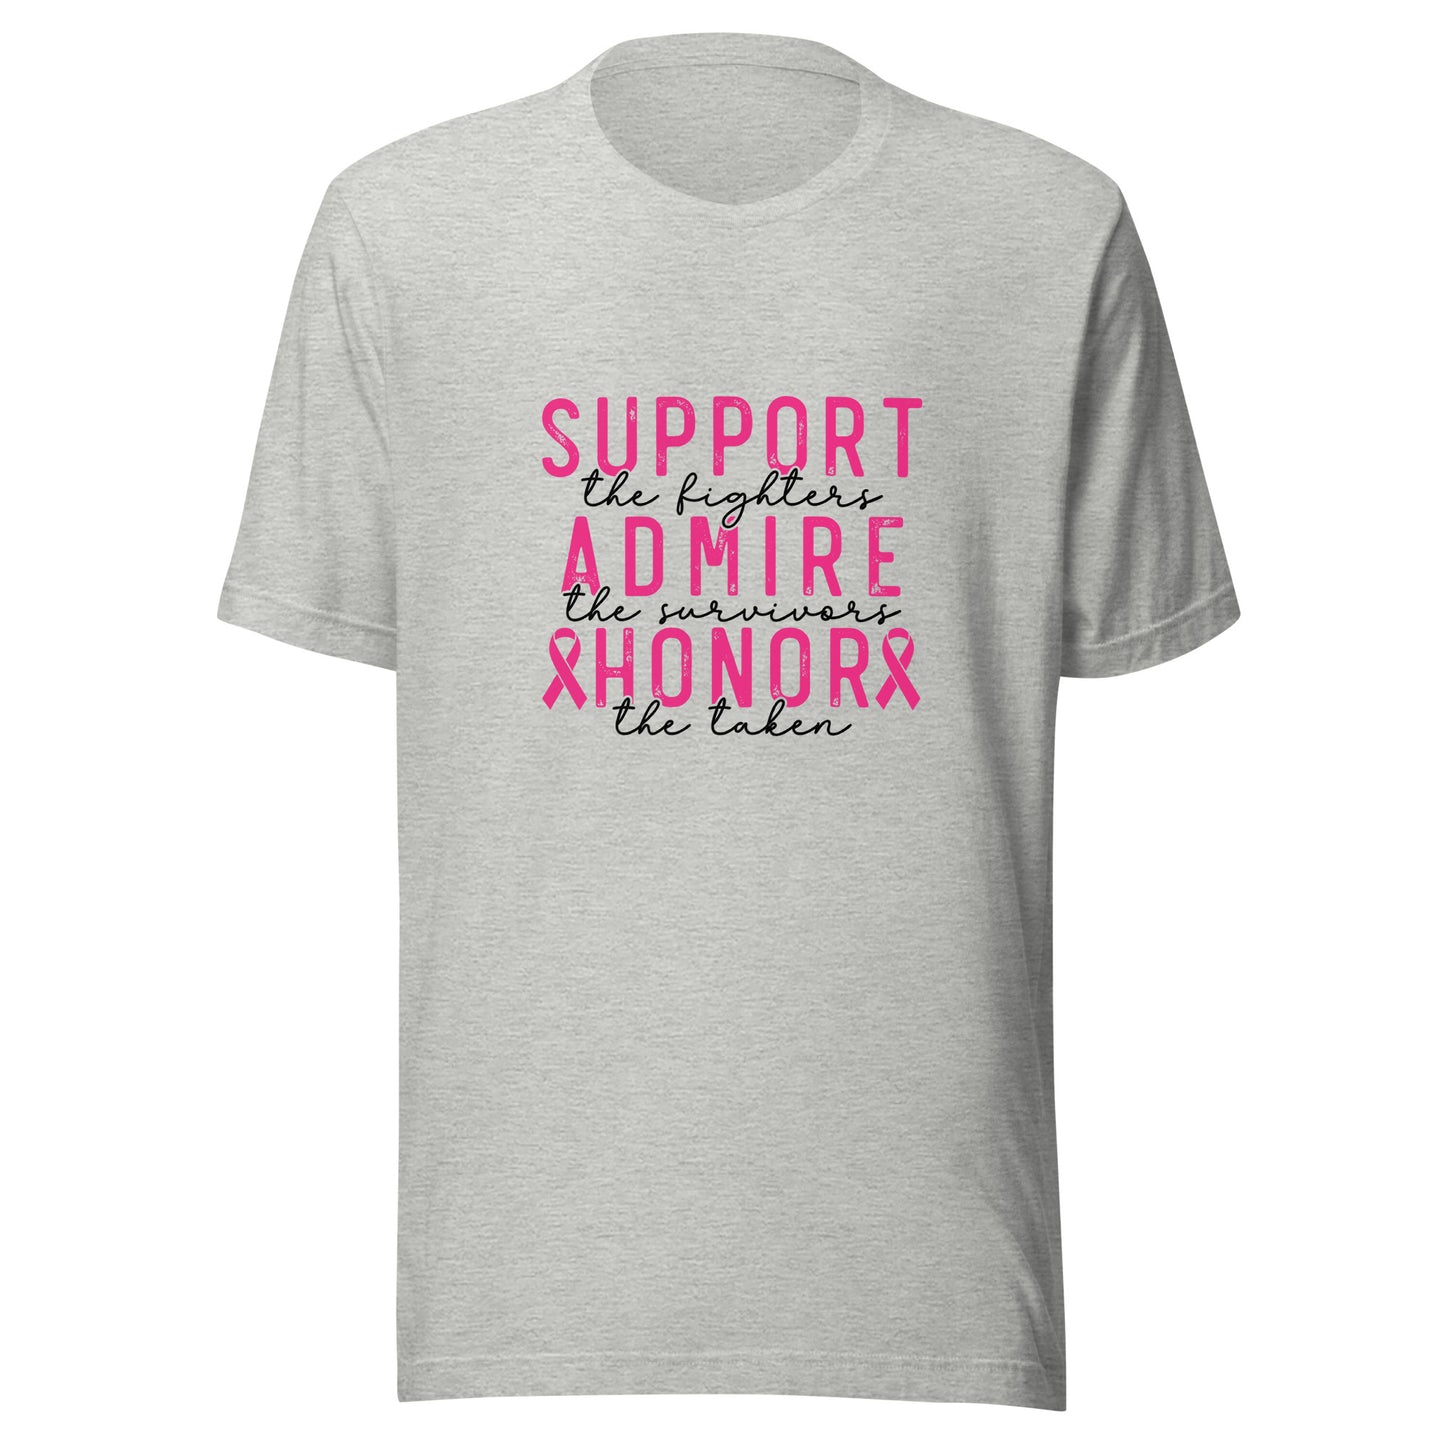 Breast Cancer Support Admire Honor - Survivor - Awareness Unisex T-shirt